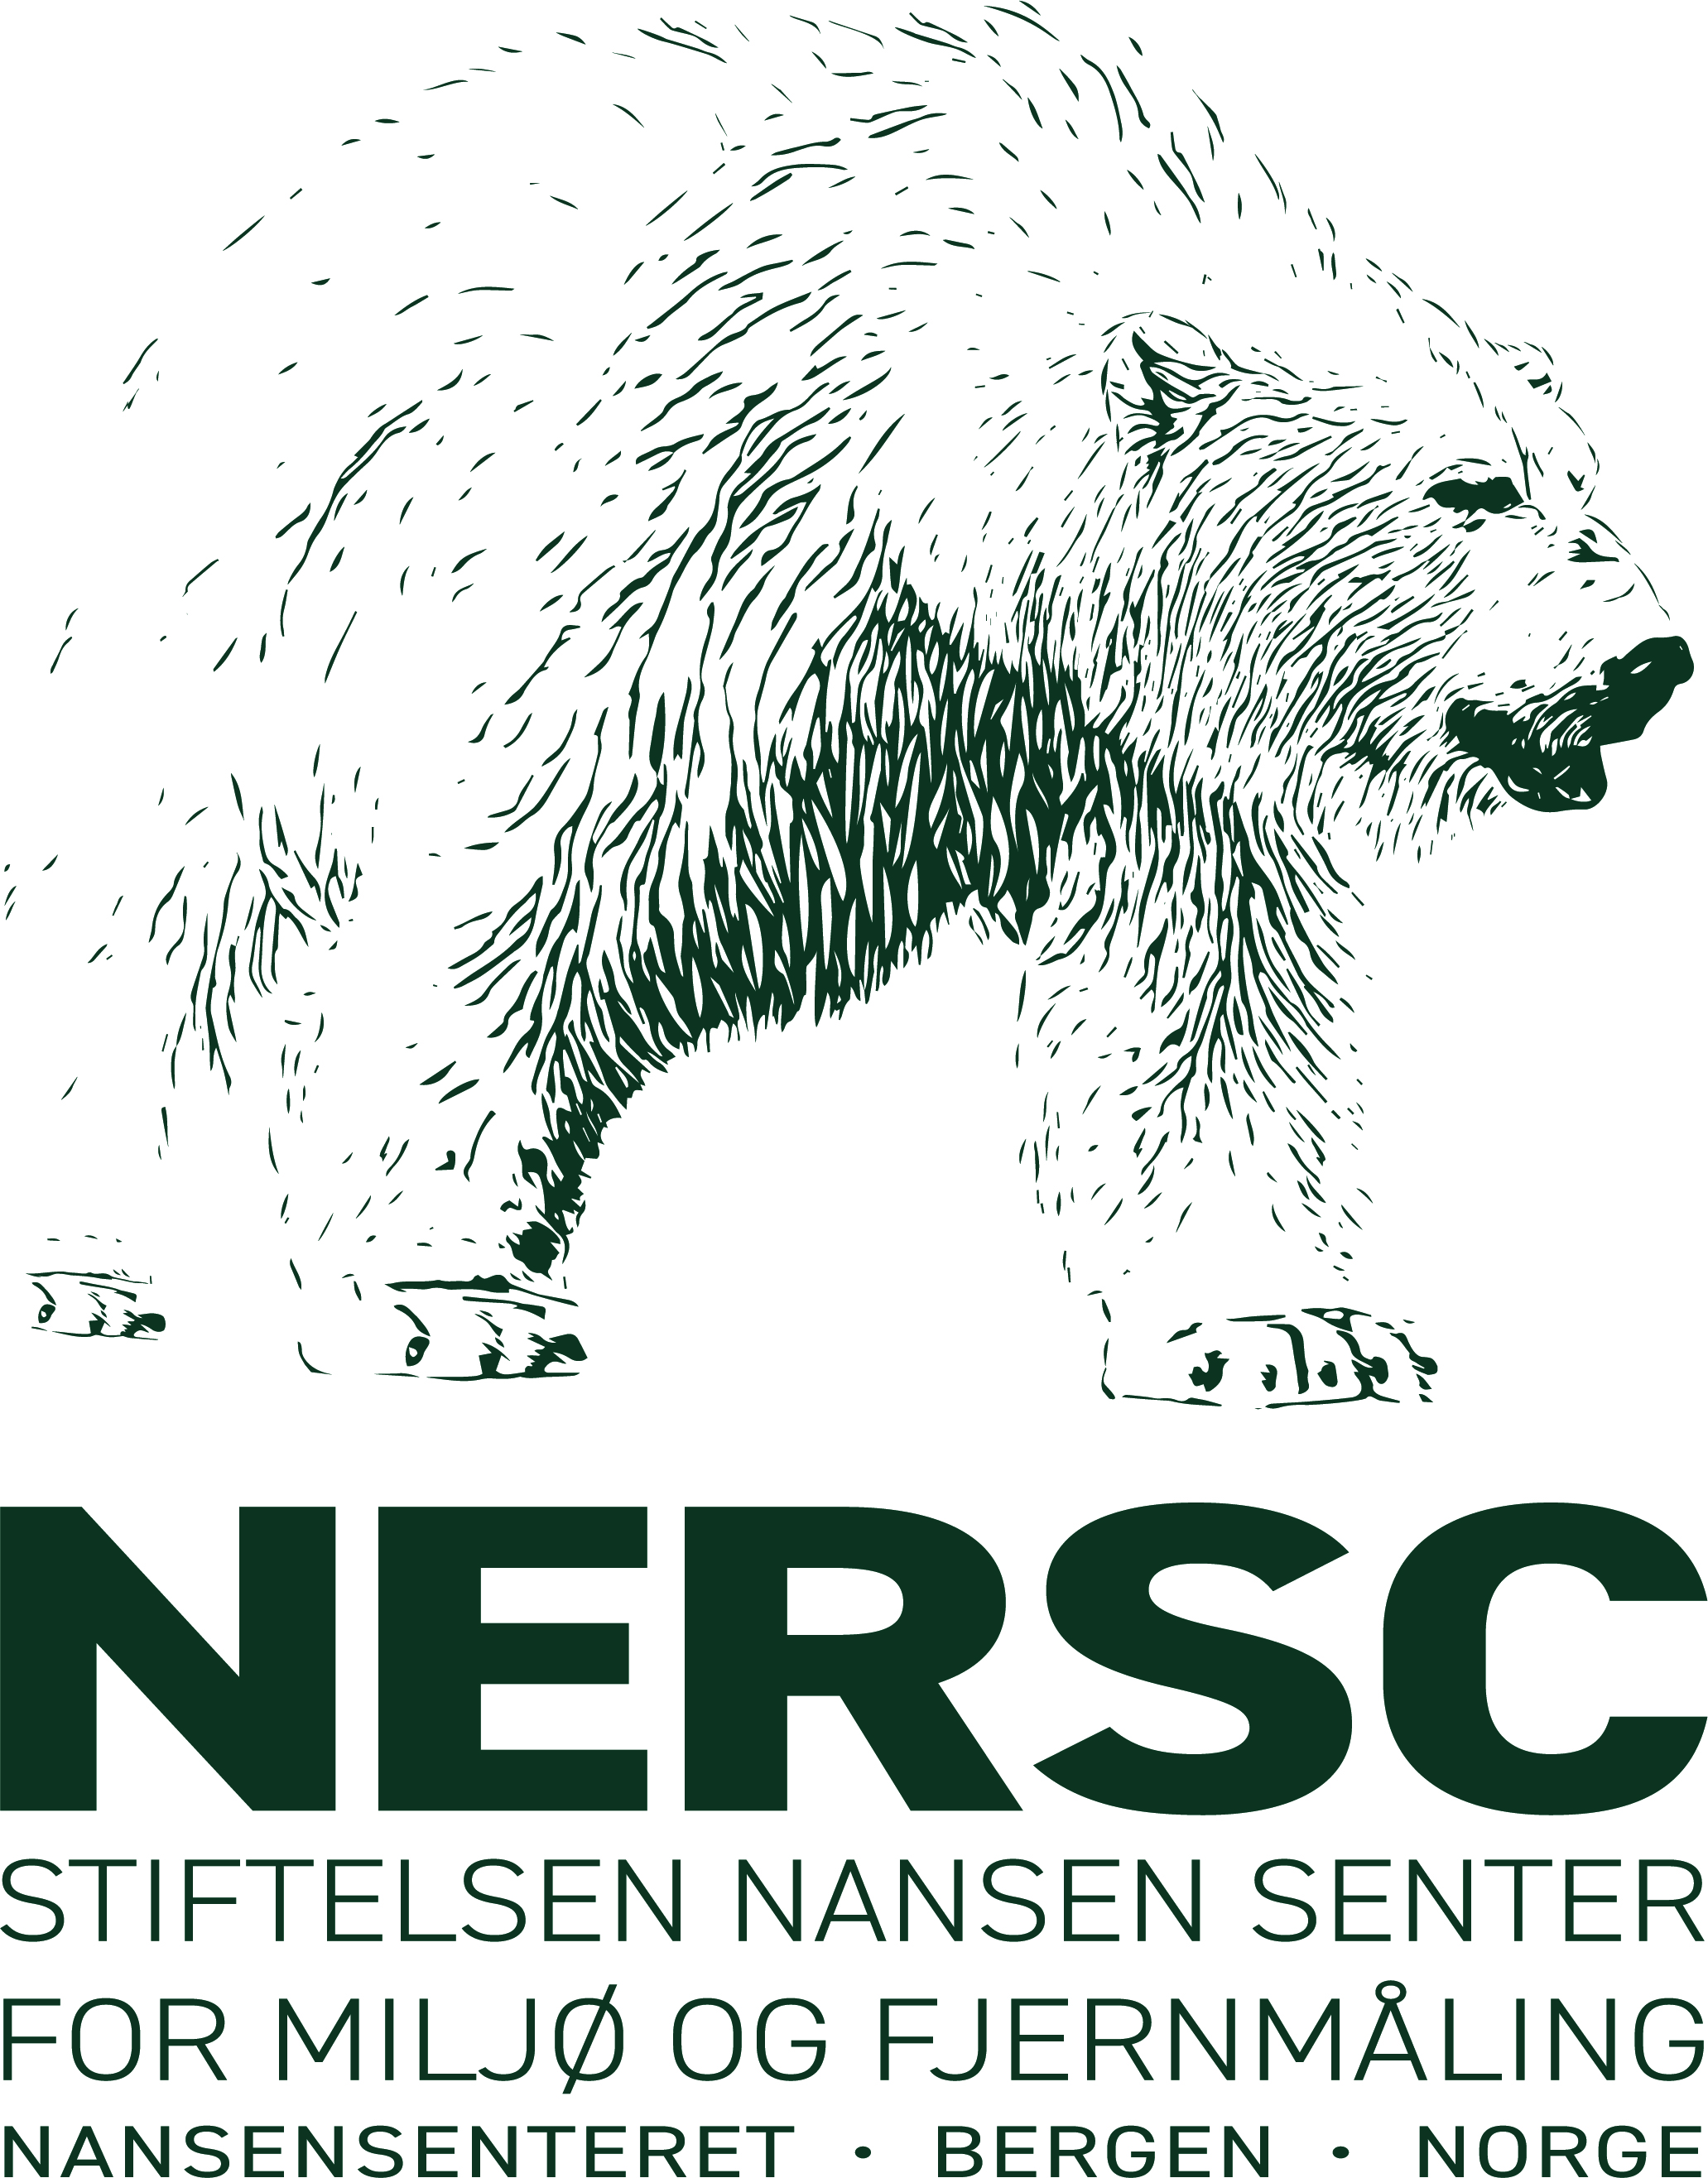 Nansen Environmental and Remote Sensing Center (NERSC)